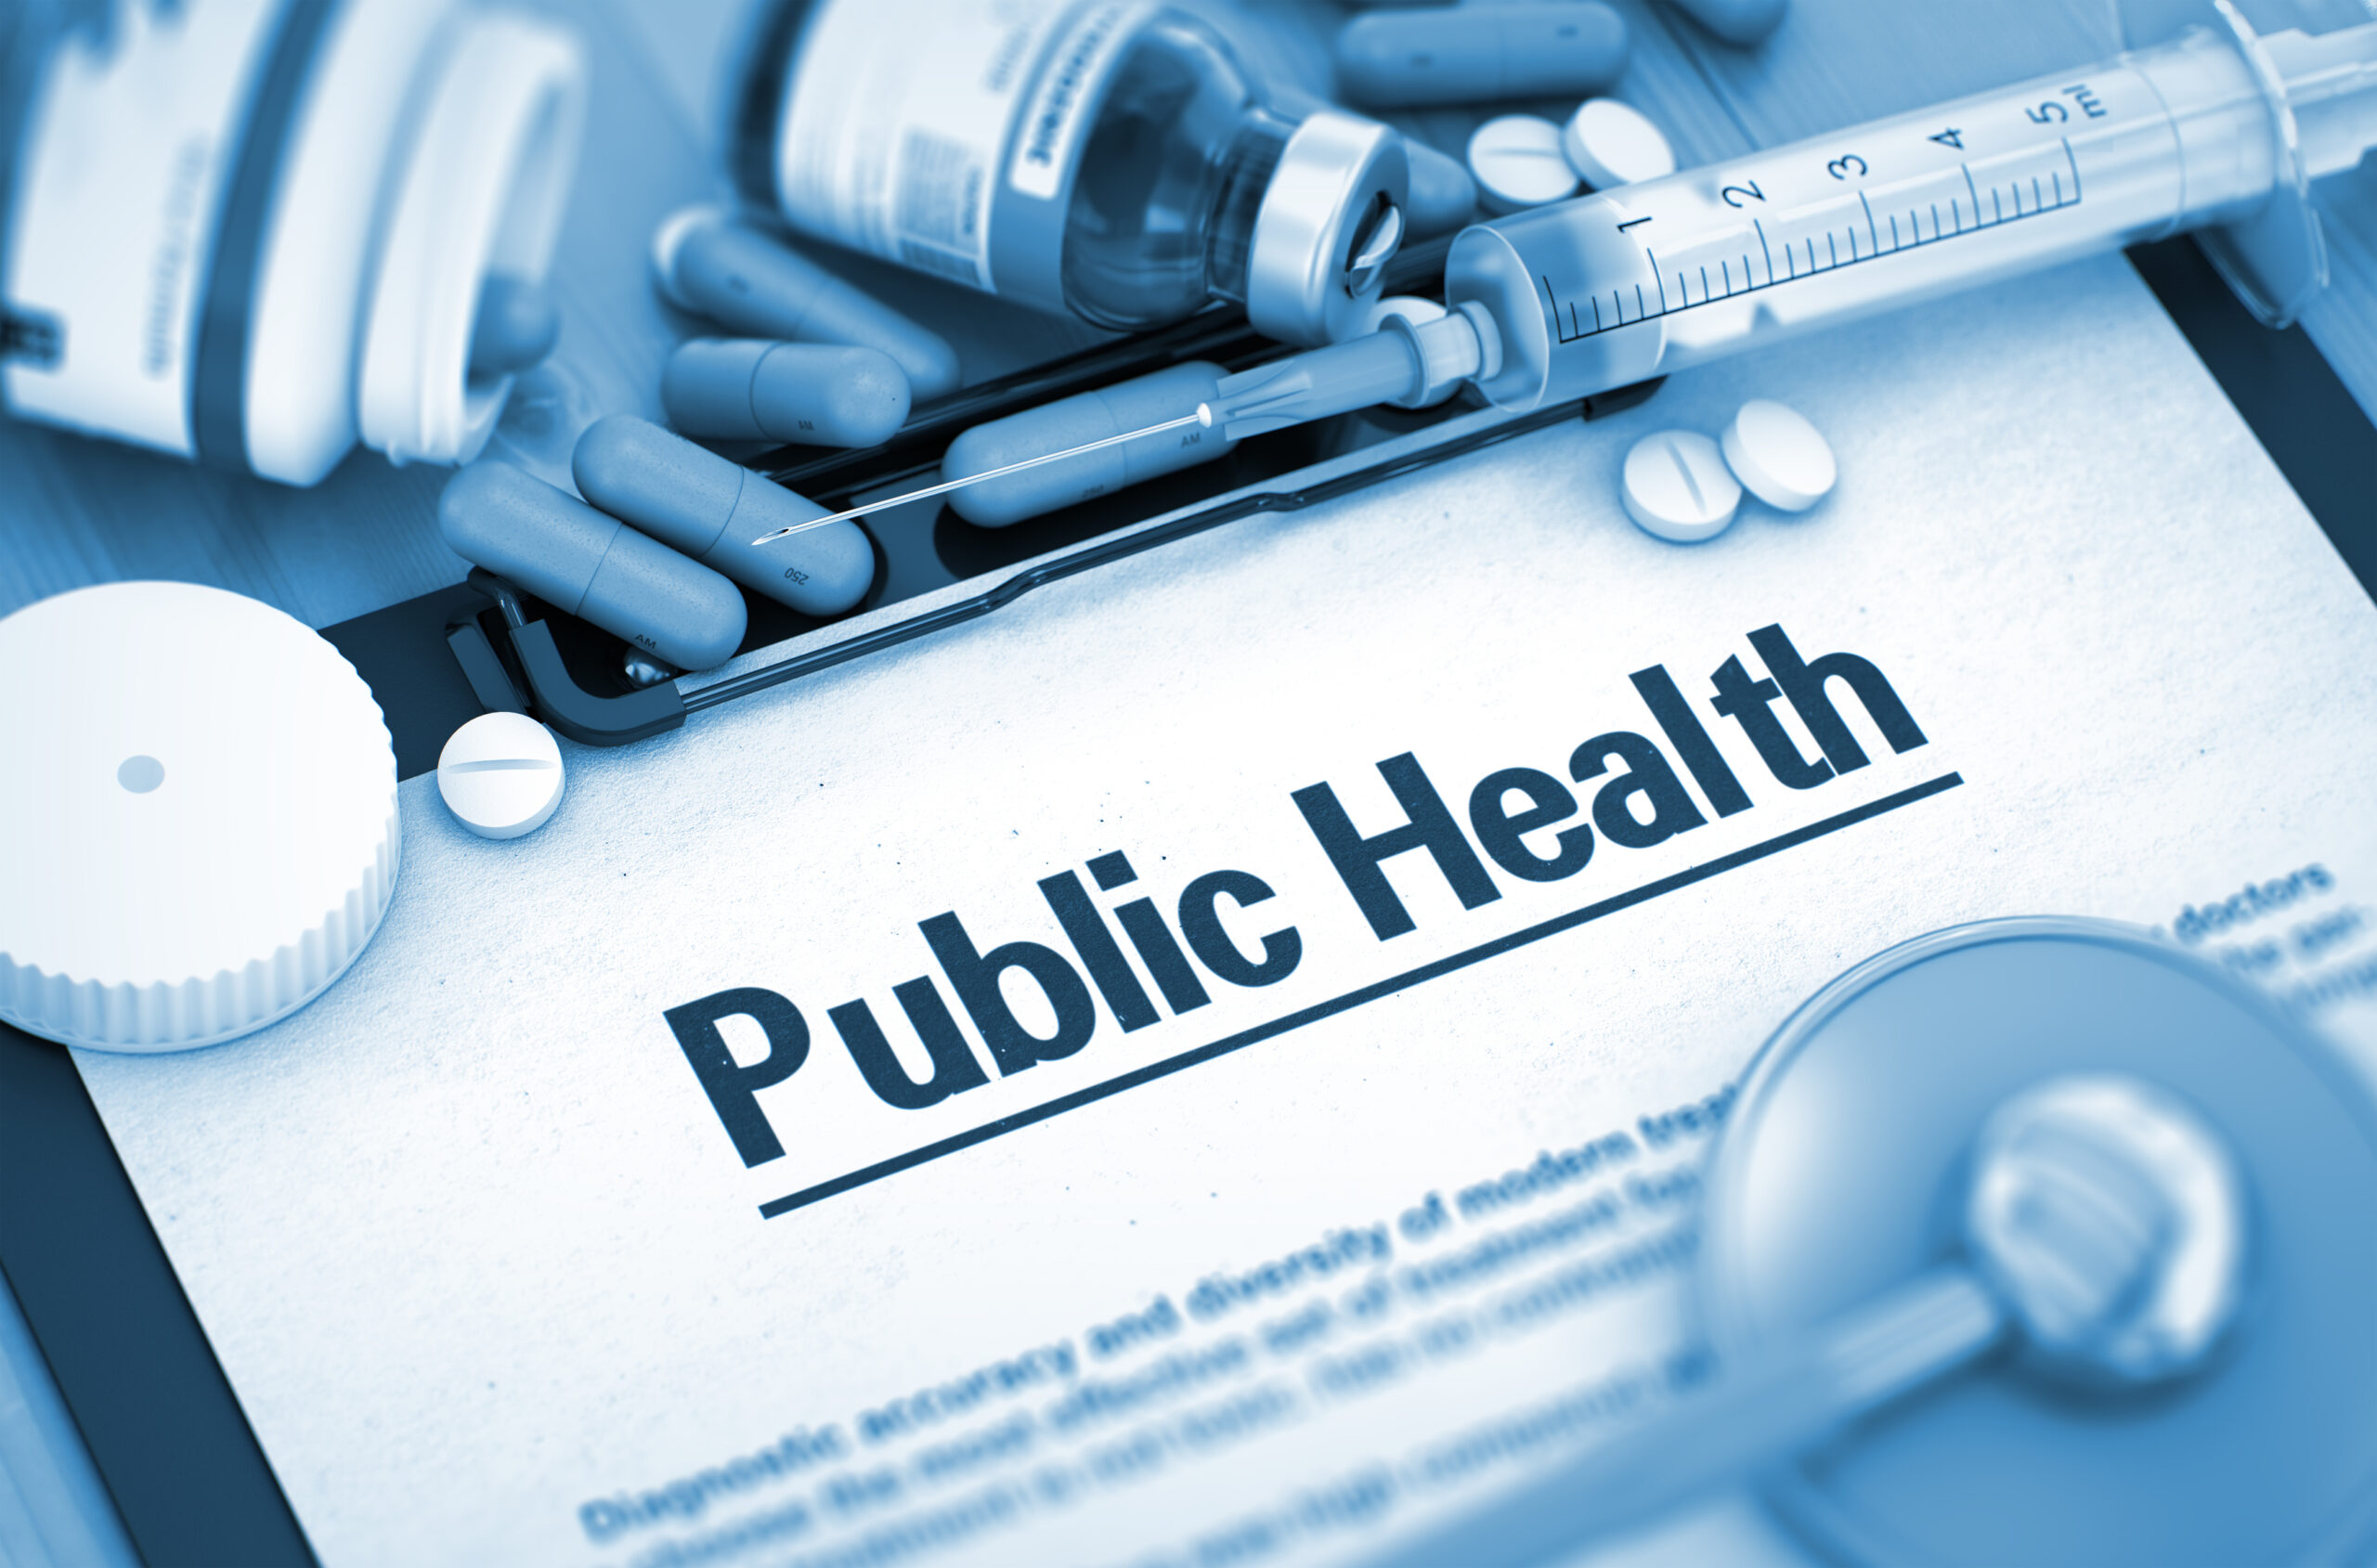 research study public health